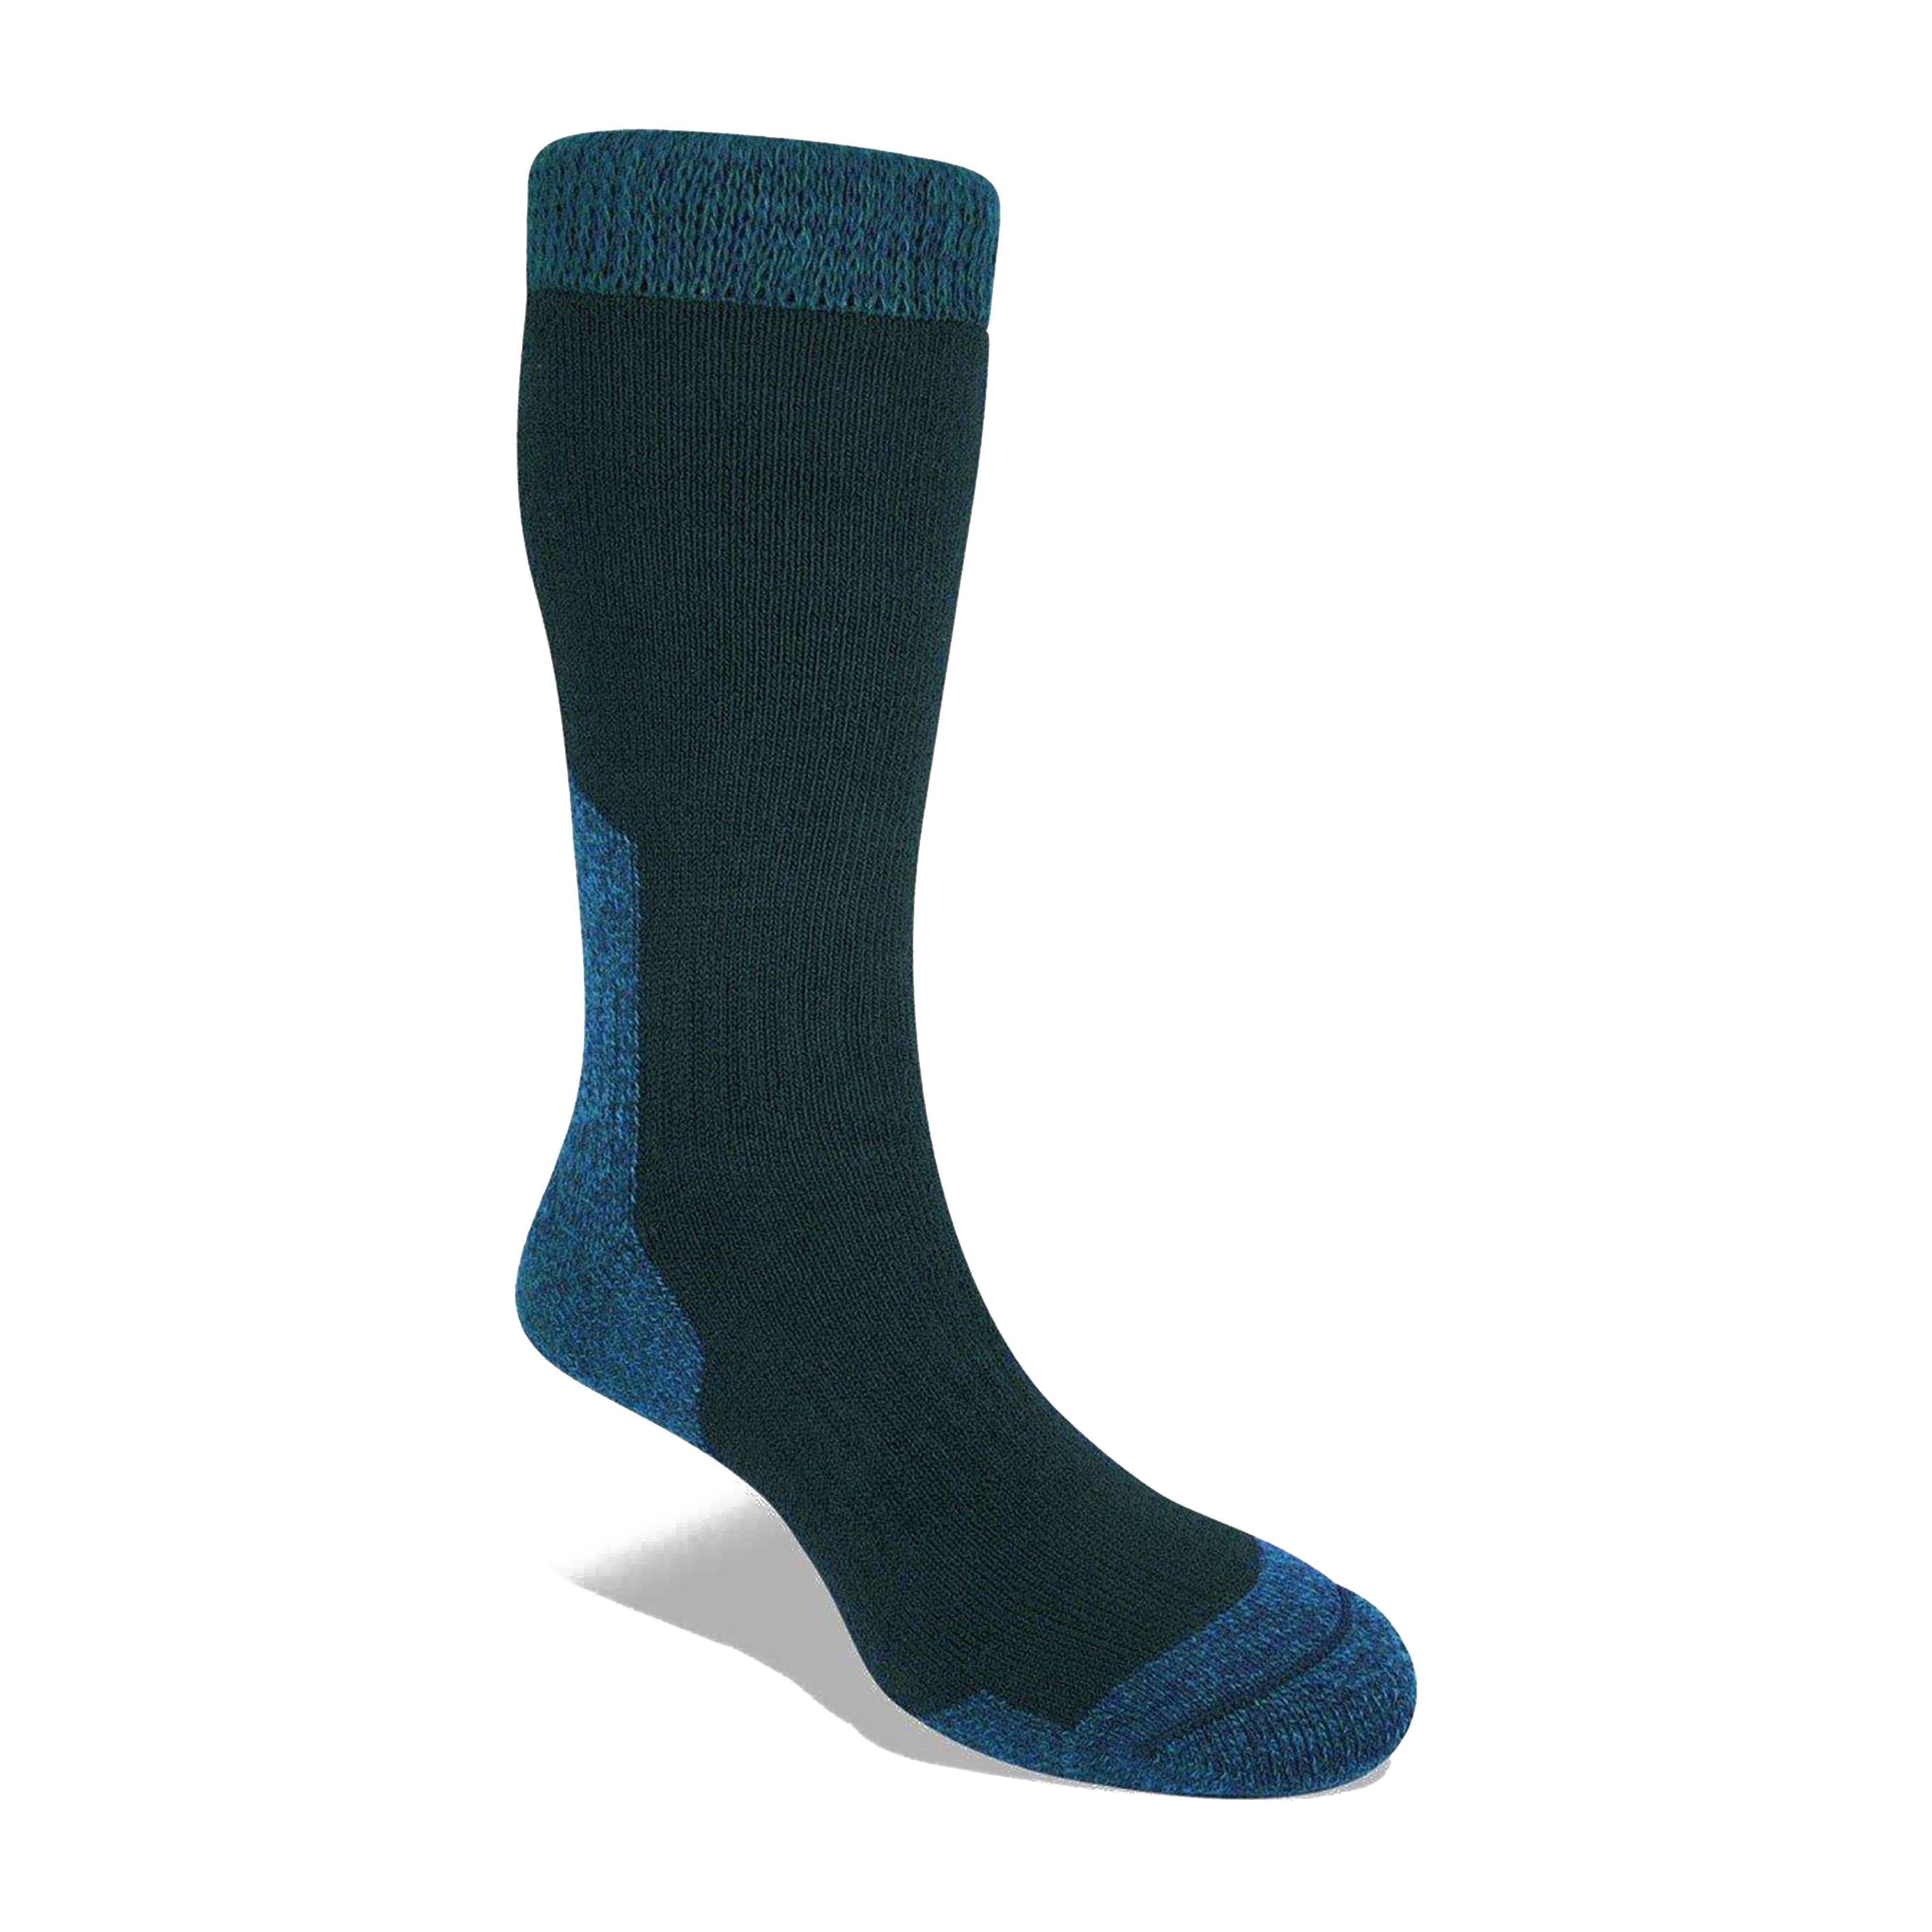 Bridgedale Explorer Heavyweight Merino Comfort Boot Socks Review